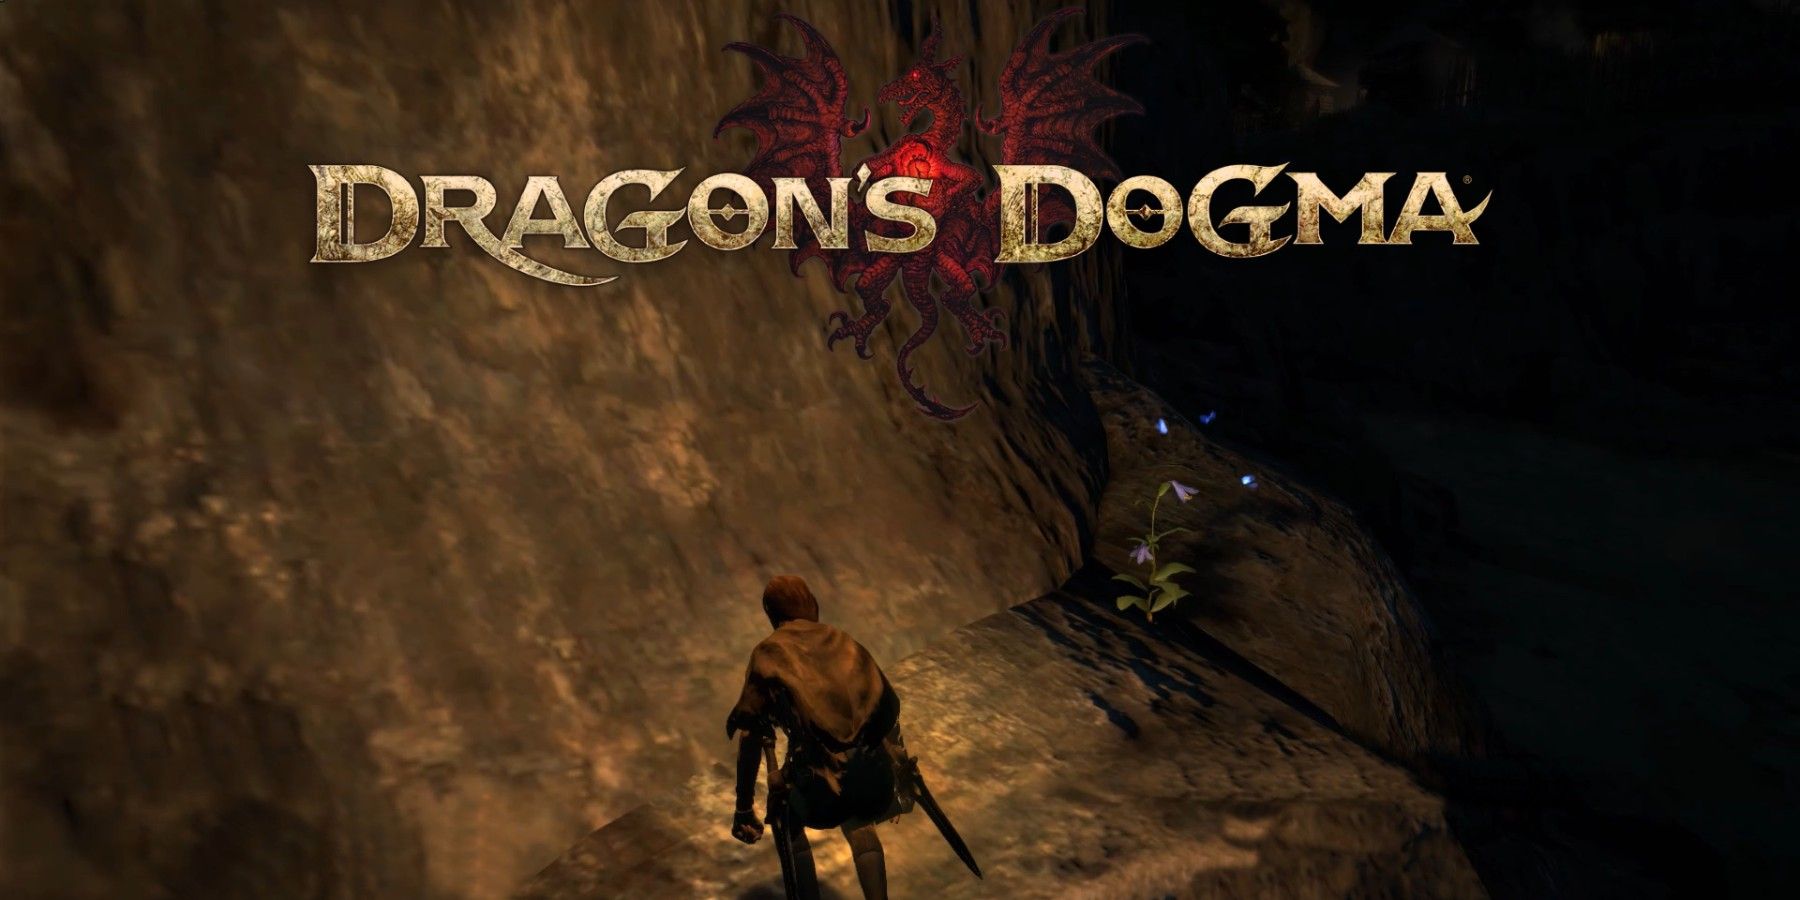 dragons dogma moonglow and logo